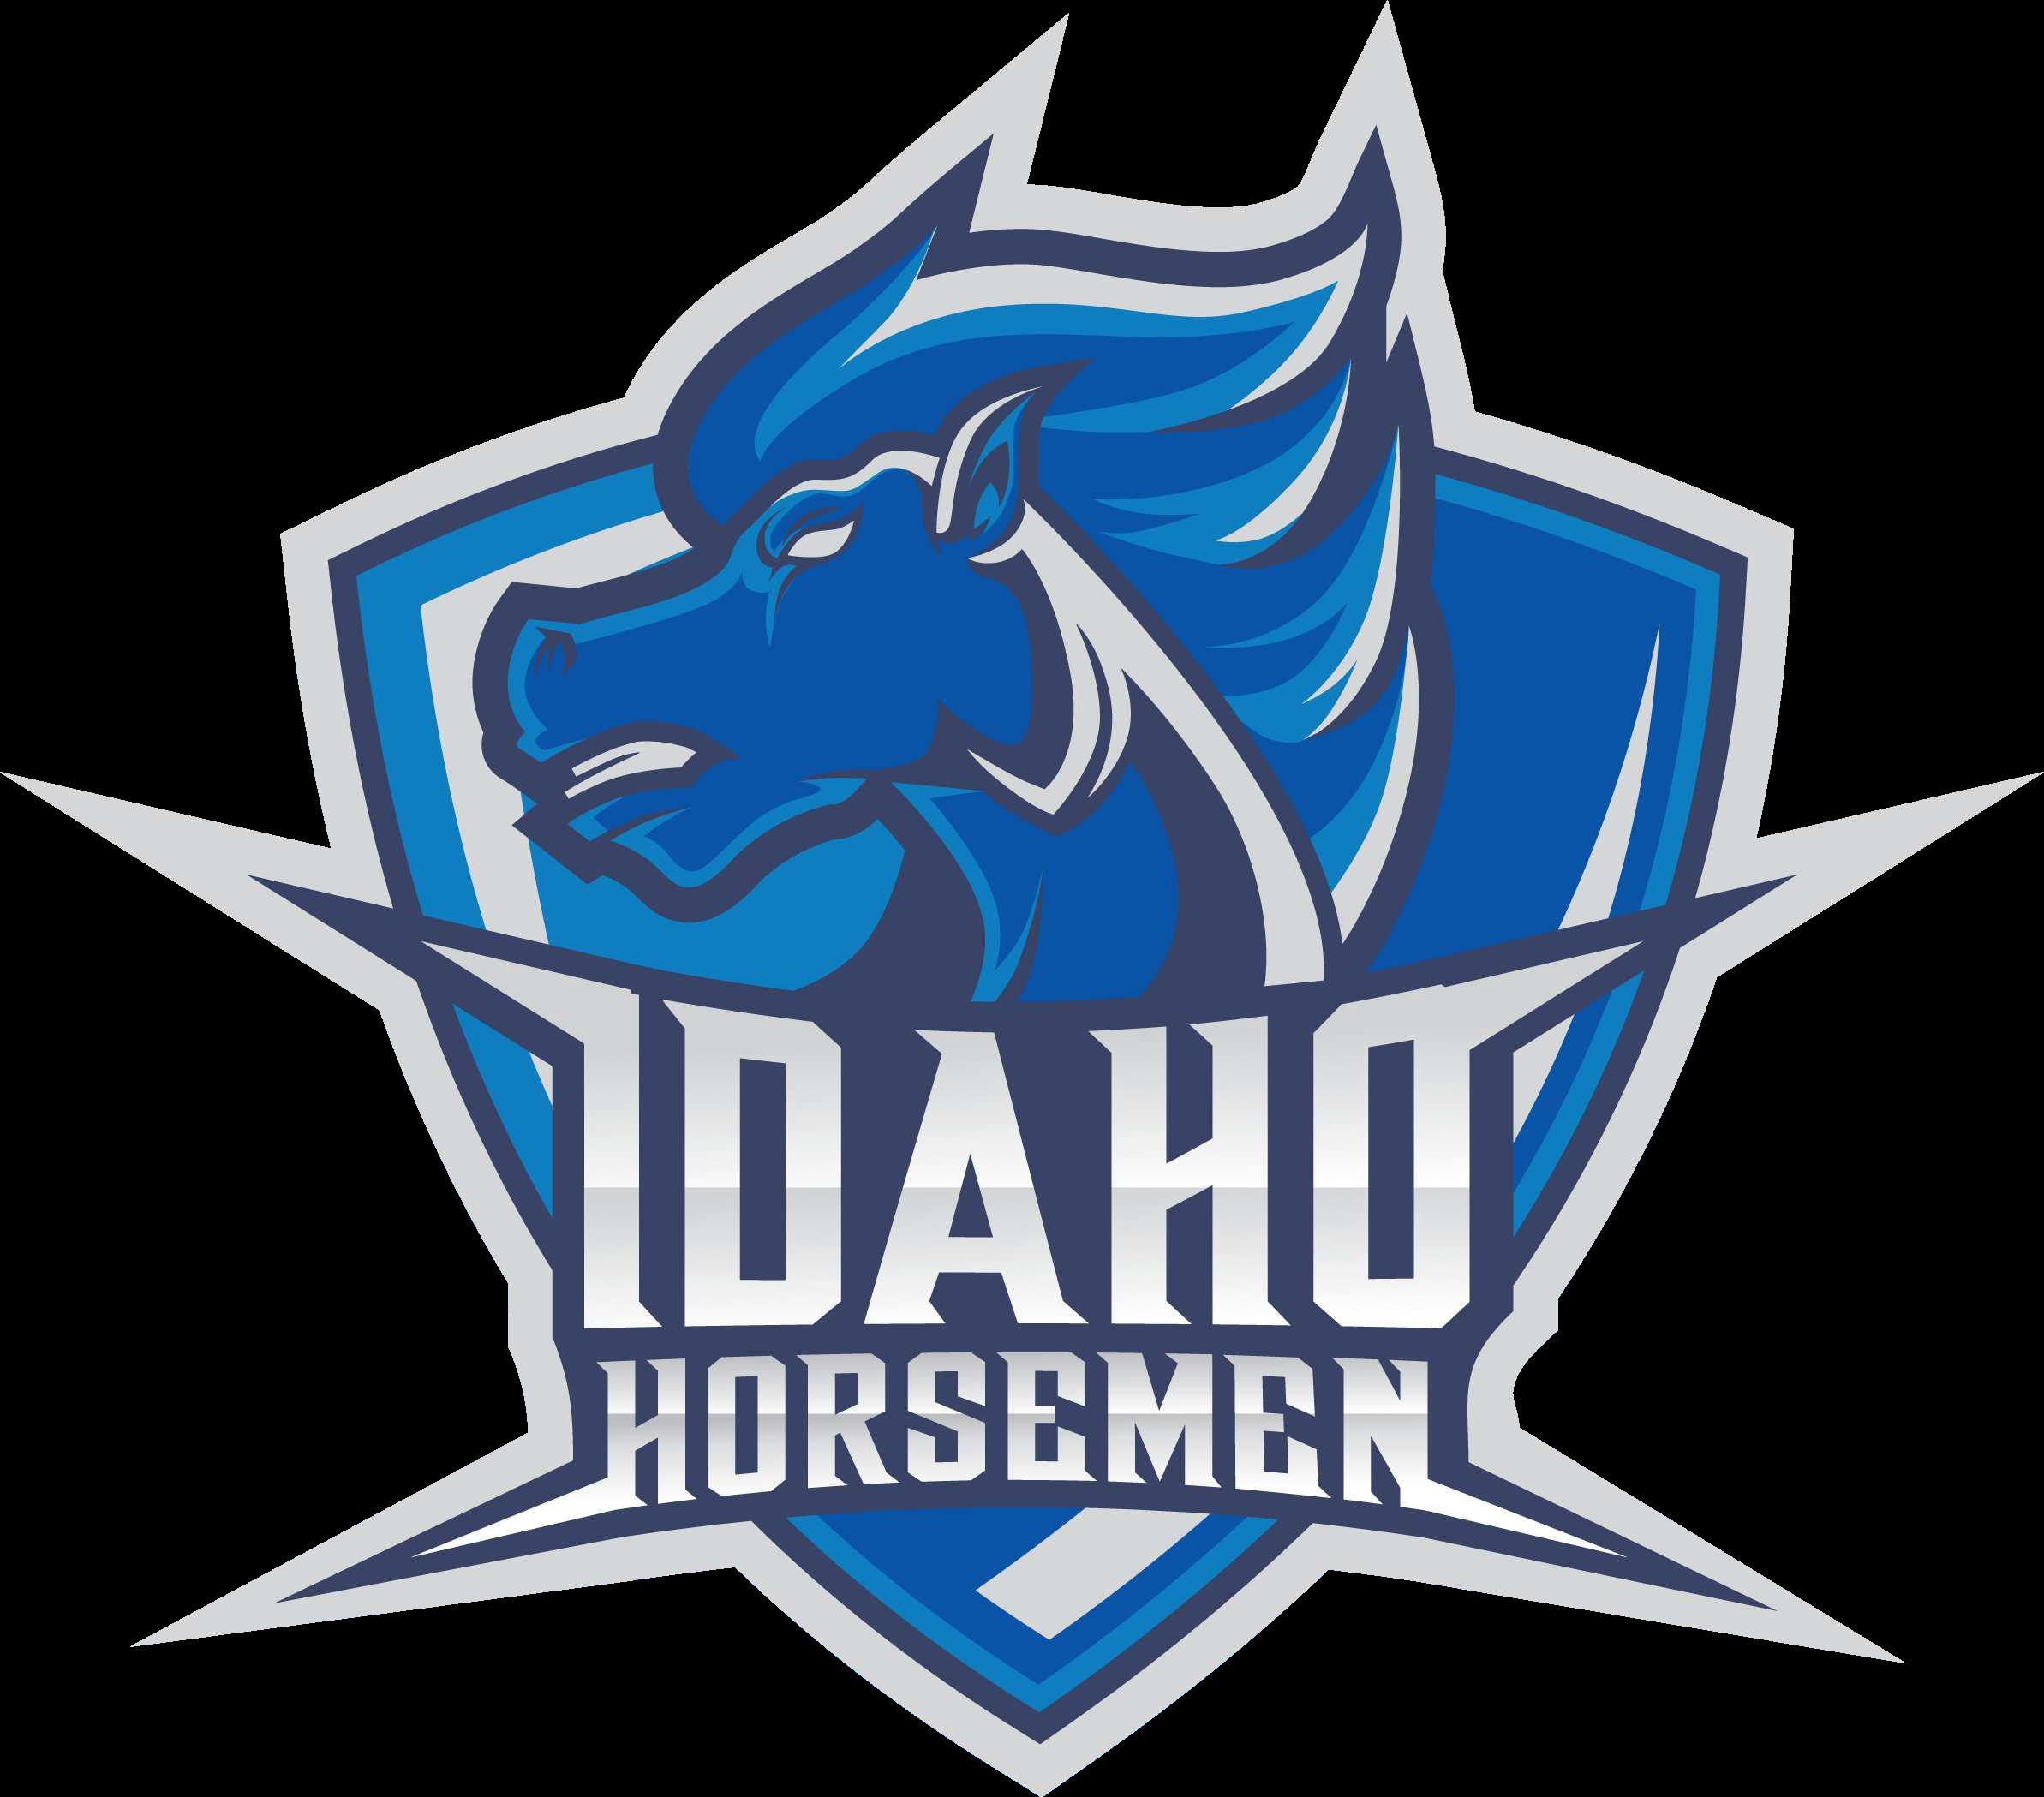 CSB Logo - CSB Boise: Idaho Horsemen Championship Game | Craig Stein Beverage